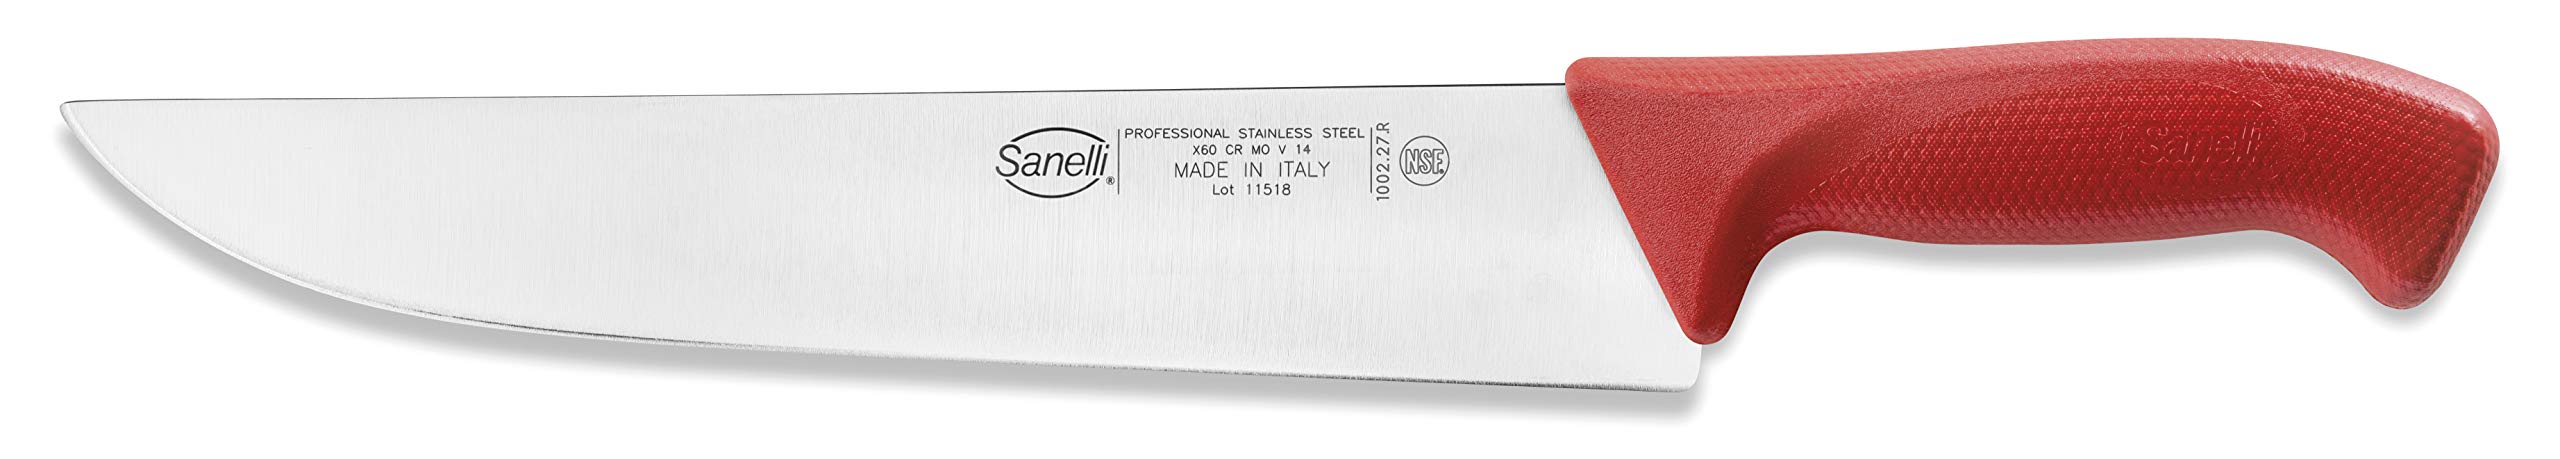 Sanelli Linea Skin Farbe Messer Frankreich, Edelstahl